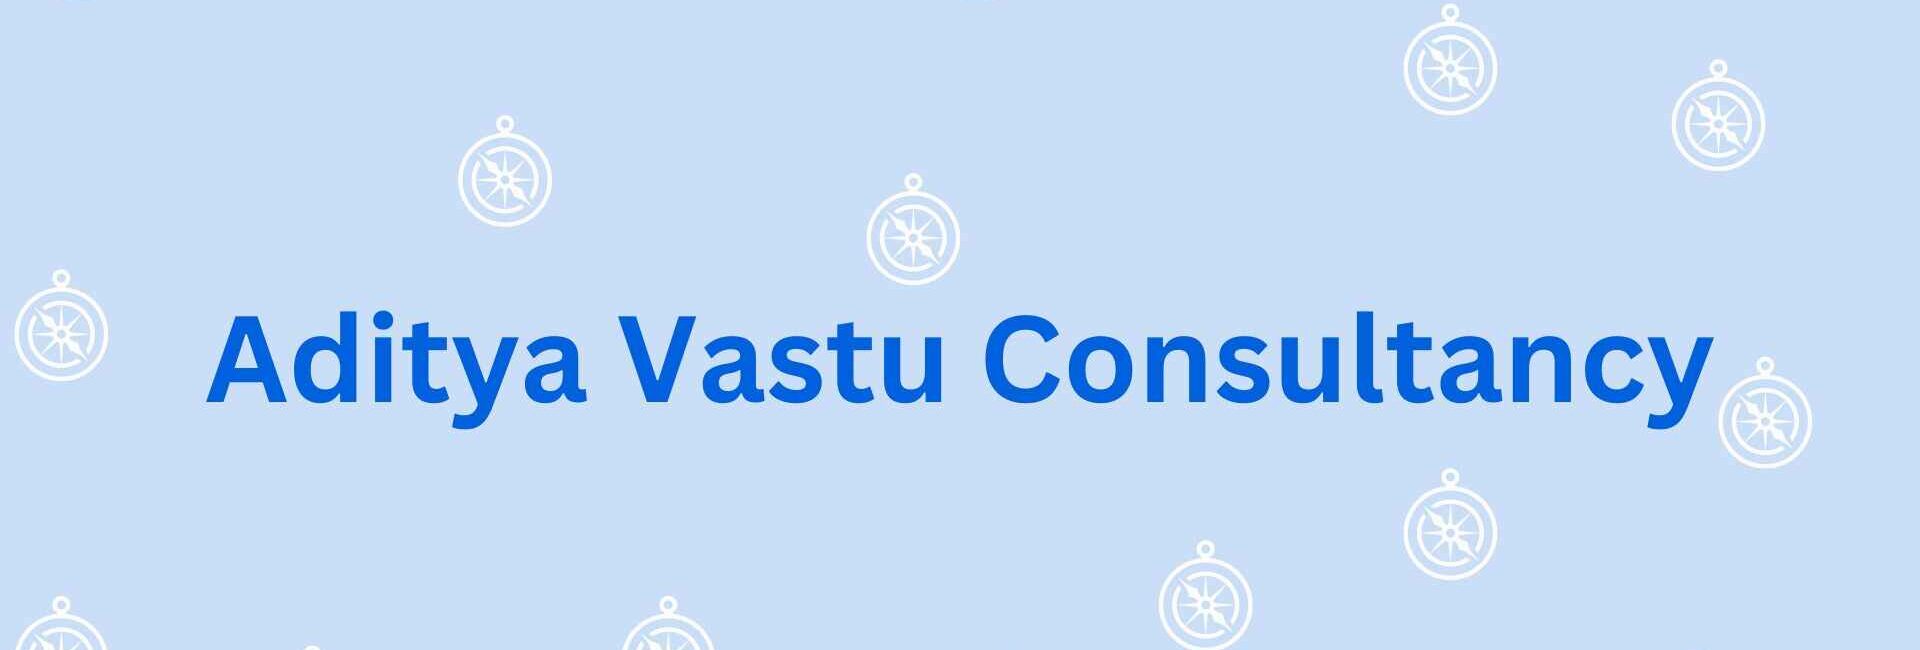 Aditya Vastu Consultancy - best Vastu services in Noida